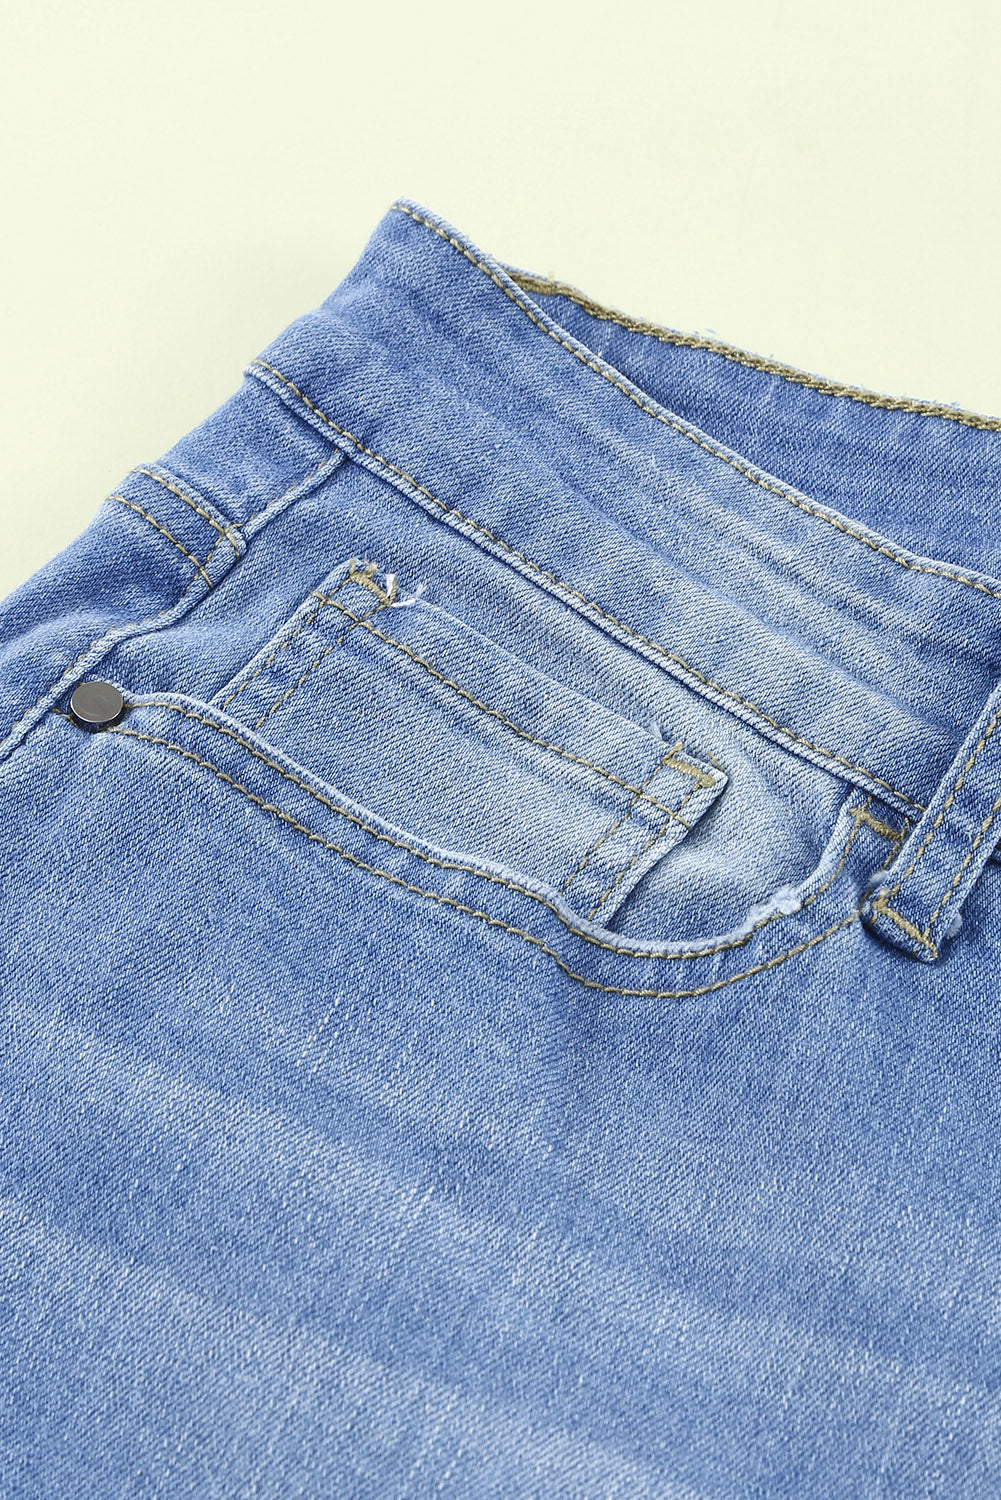 Sky Blue High Rise Distressed Bell Bottom Denims Jeans JT's Designer Fashion